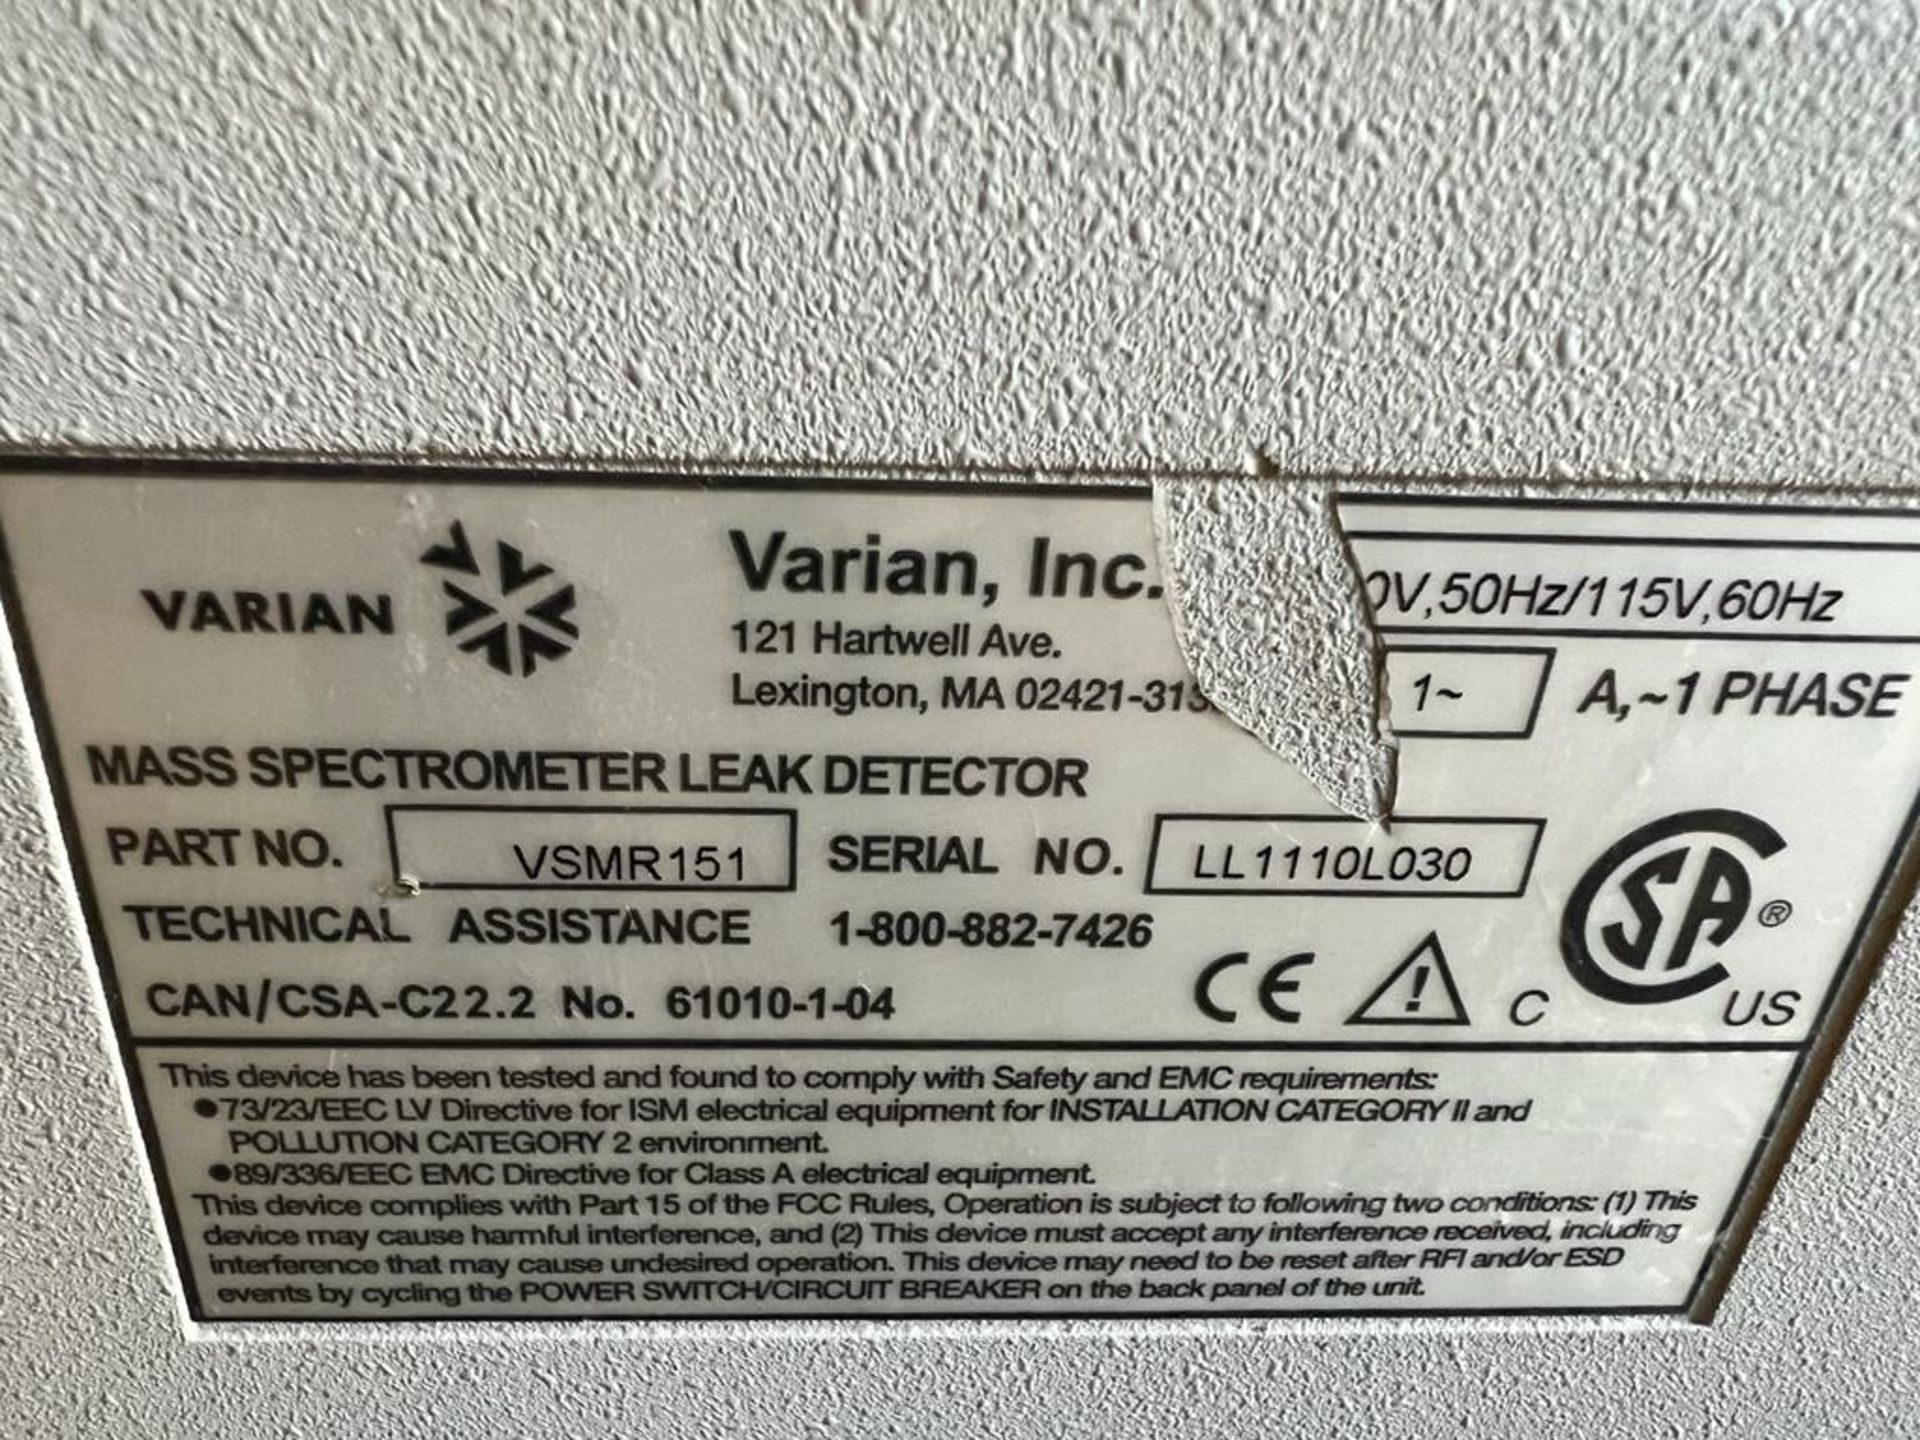 Varian Inc Mass Spectrometer Leak Detector Part No. VSMR151 Nice Condition Leak Detector - Image 6 of 6